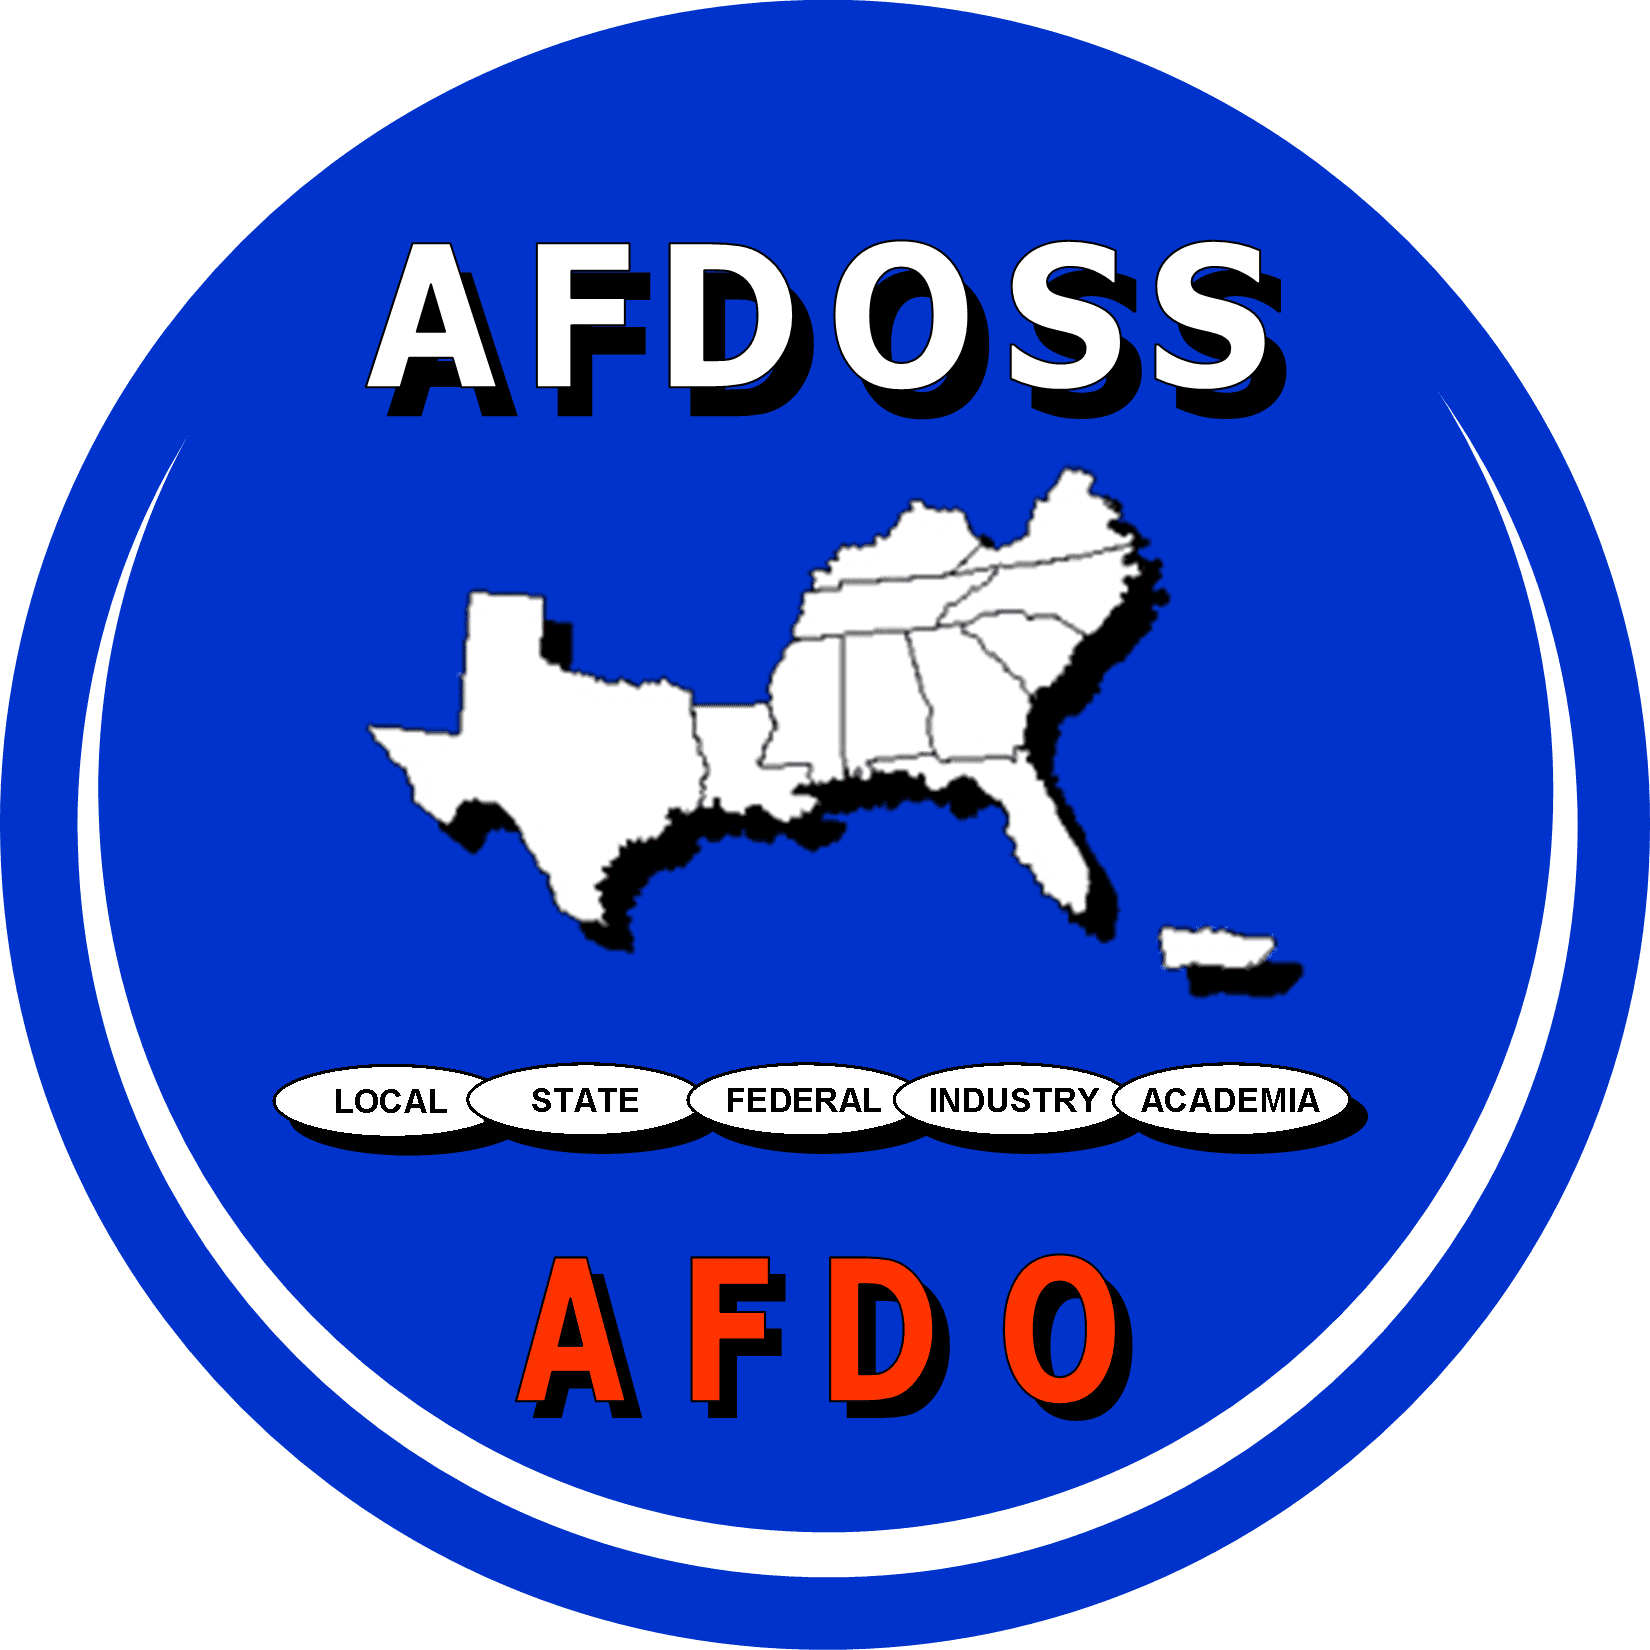 AFDOSS logo